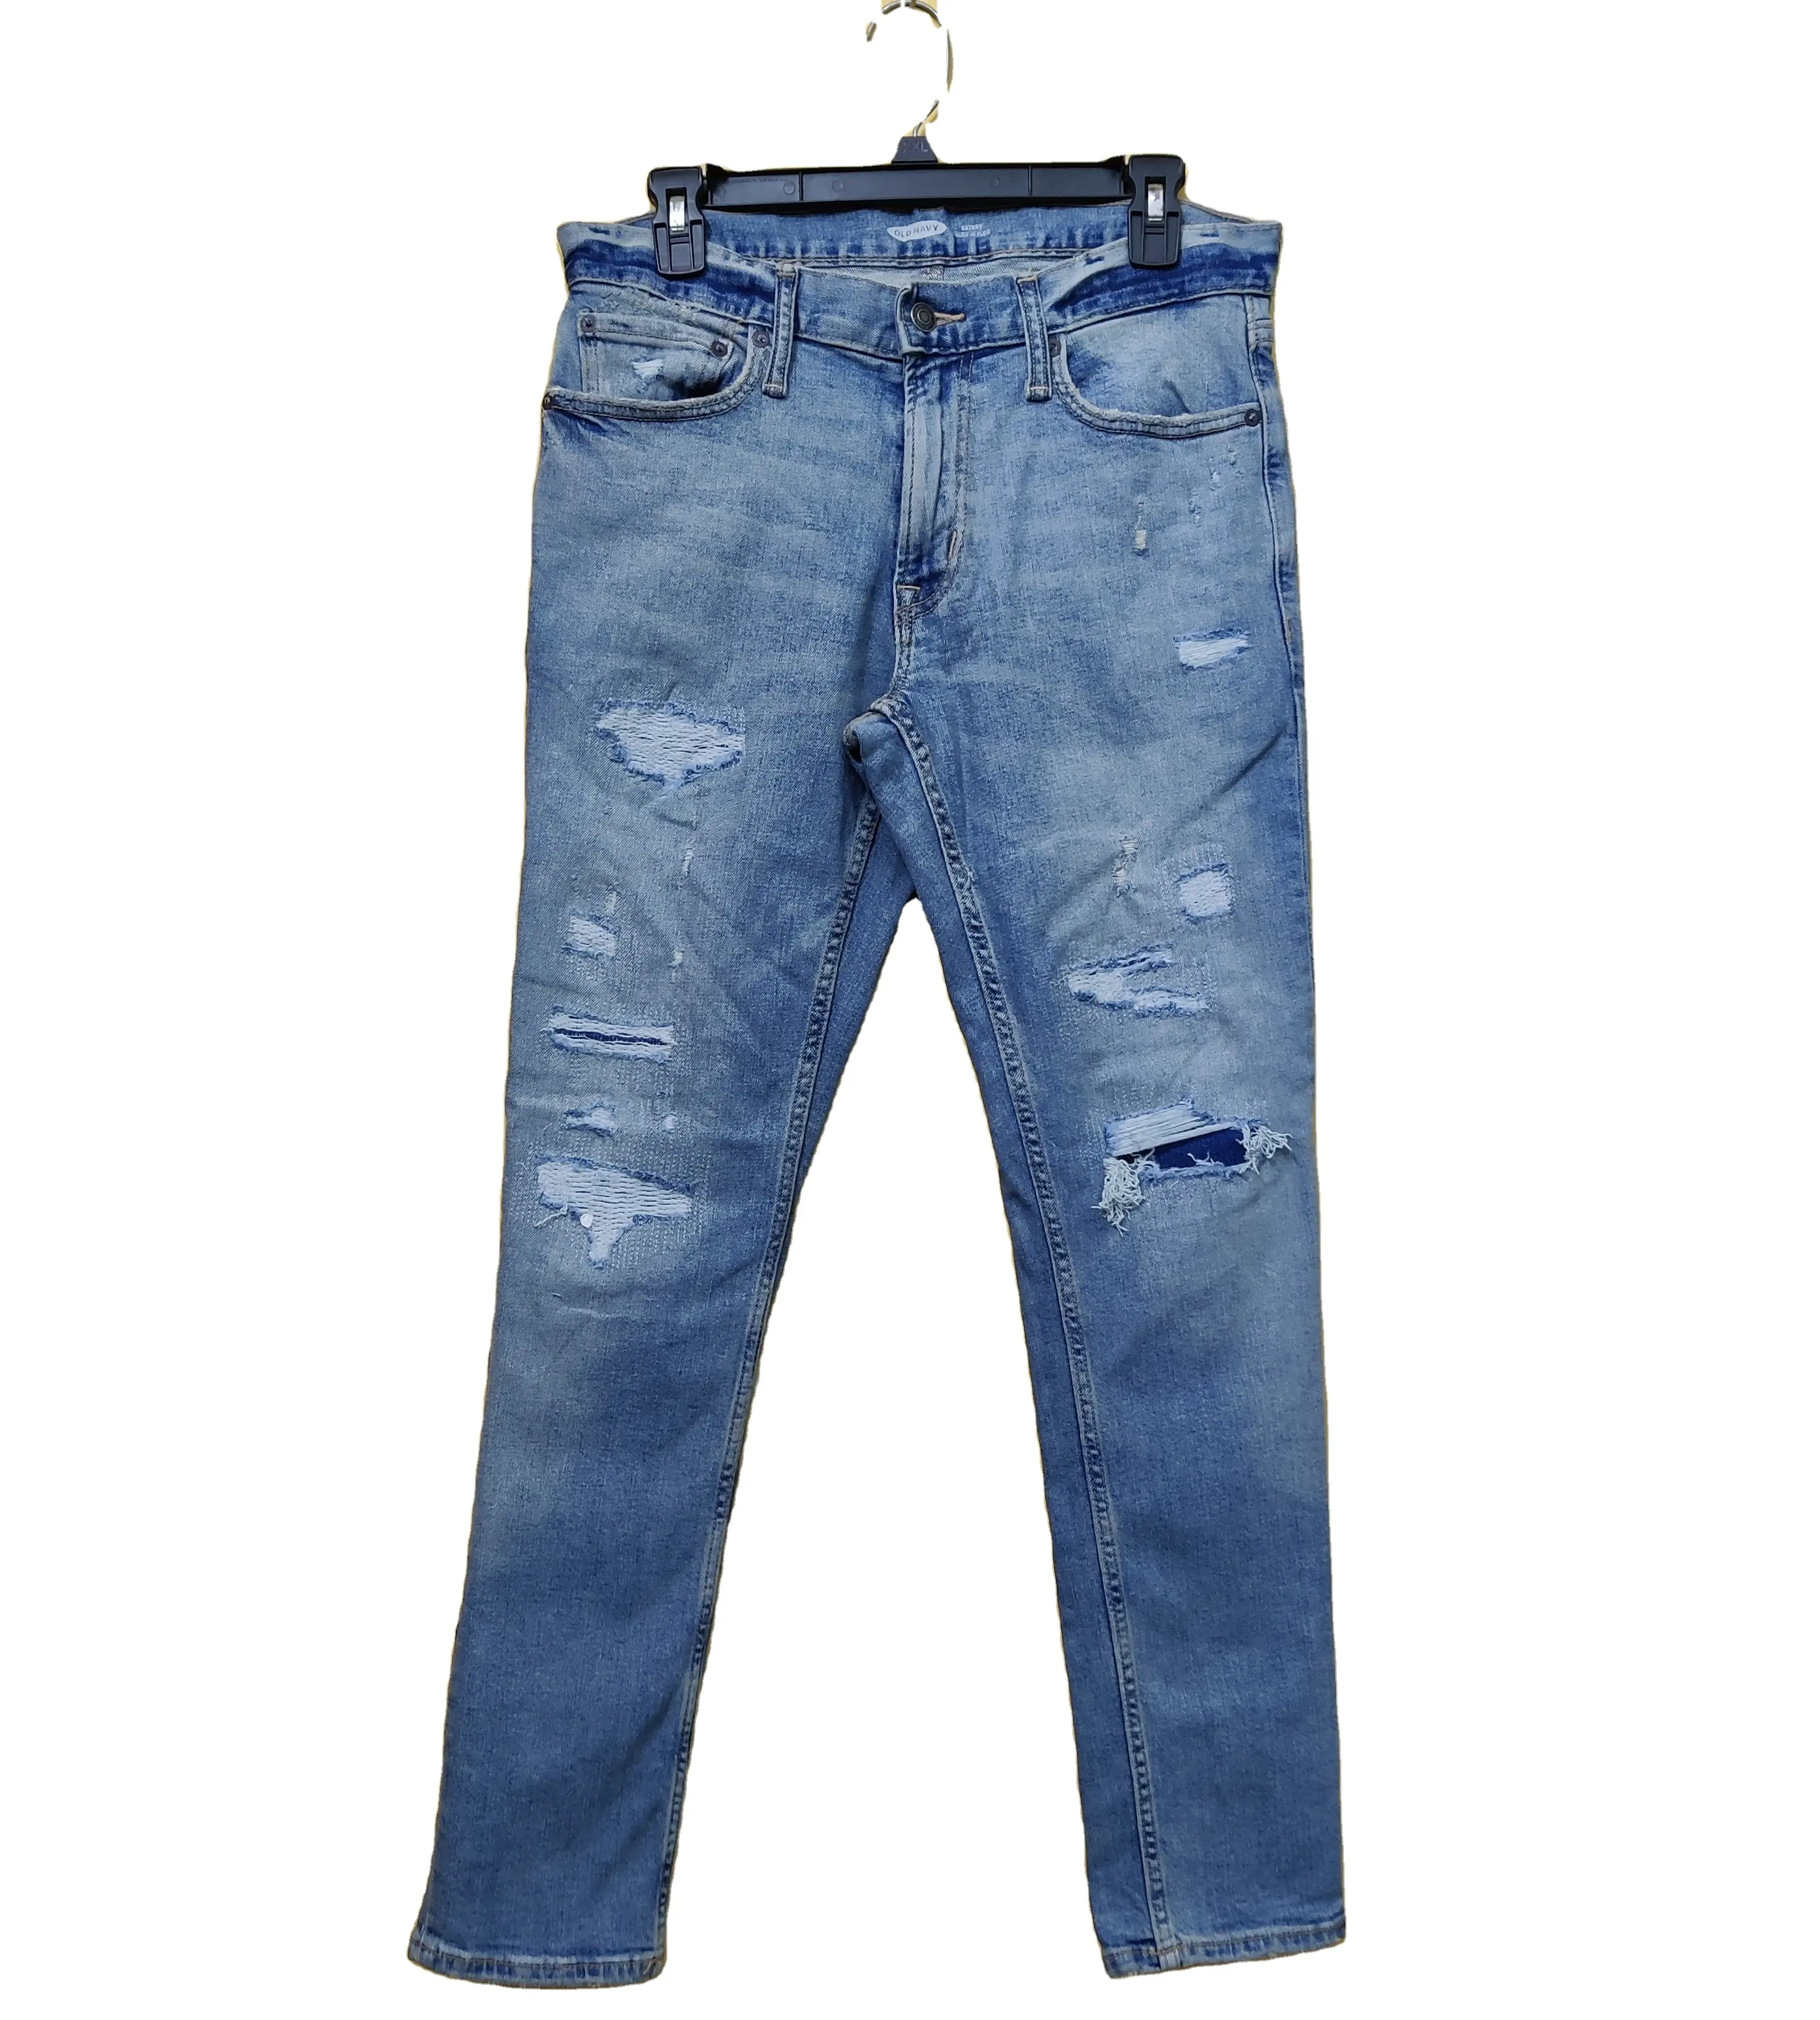 Surplus Original Branded Men's Slim Fit Jeans From Stock Market in Bangladesh